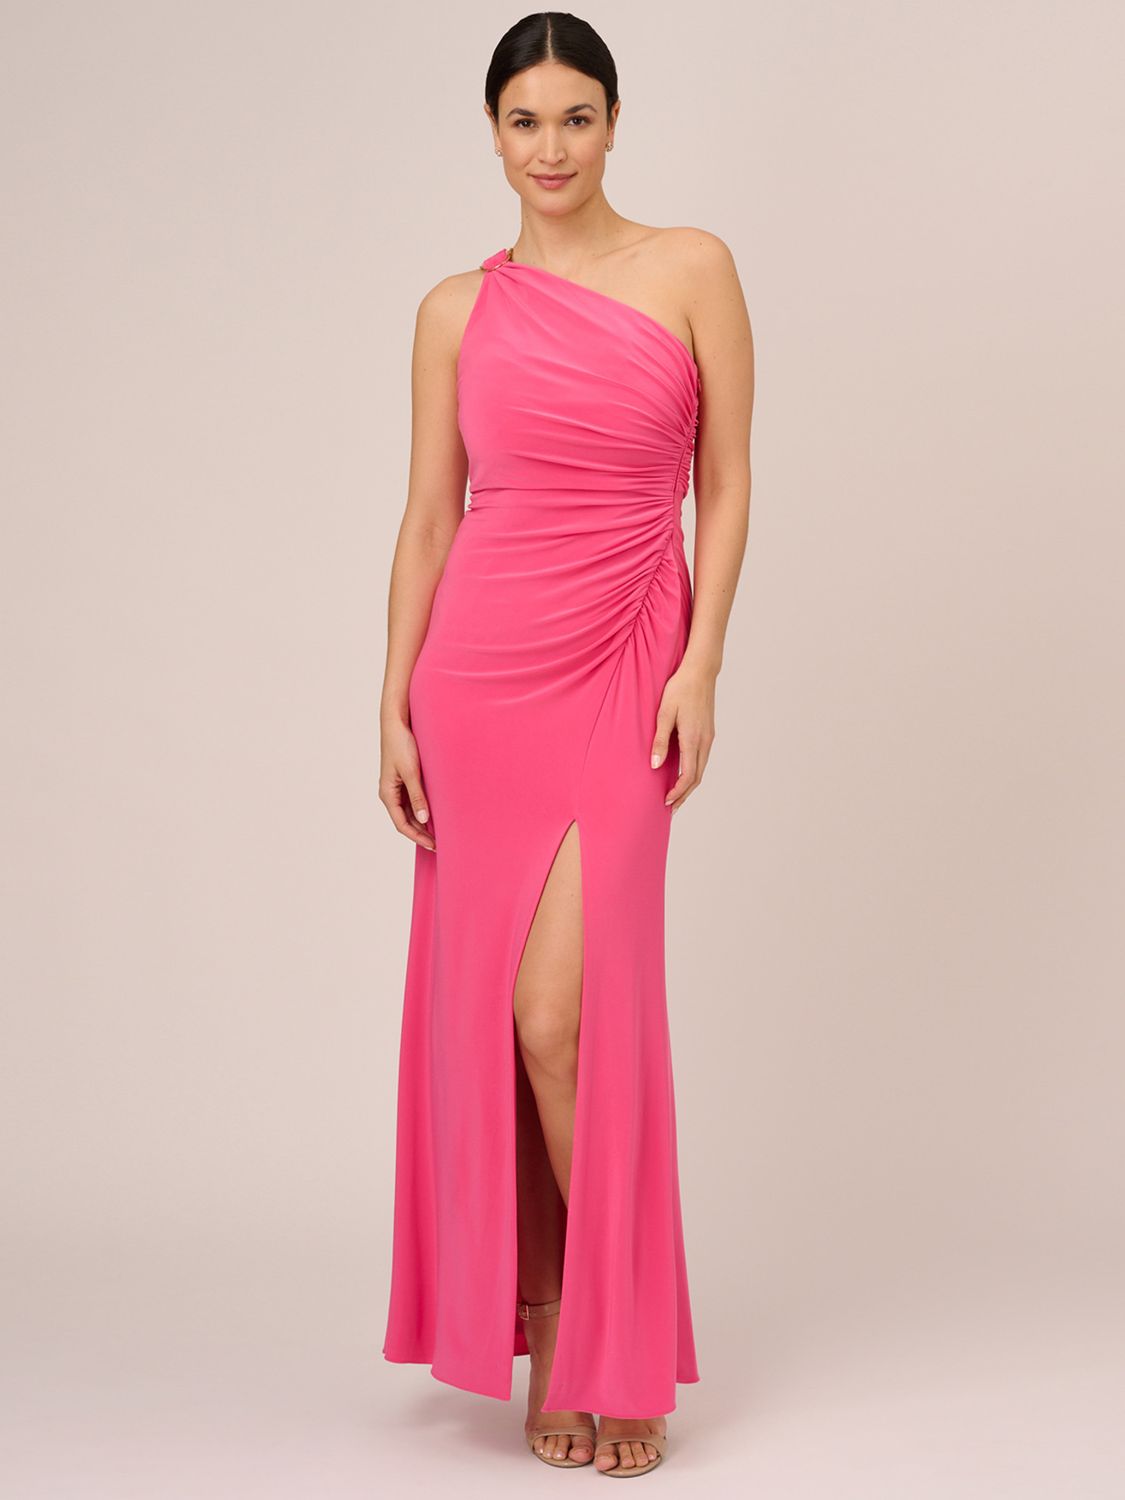 sneen Diktat himmel Adrianna Papell One Shoulder Gown Dress, Pink at John Lewis & Partners